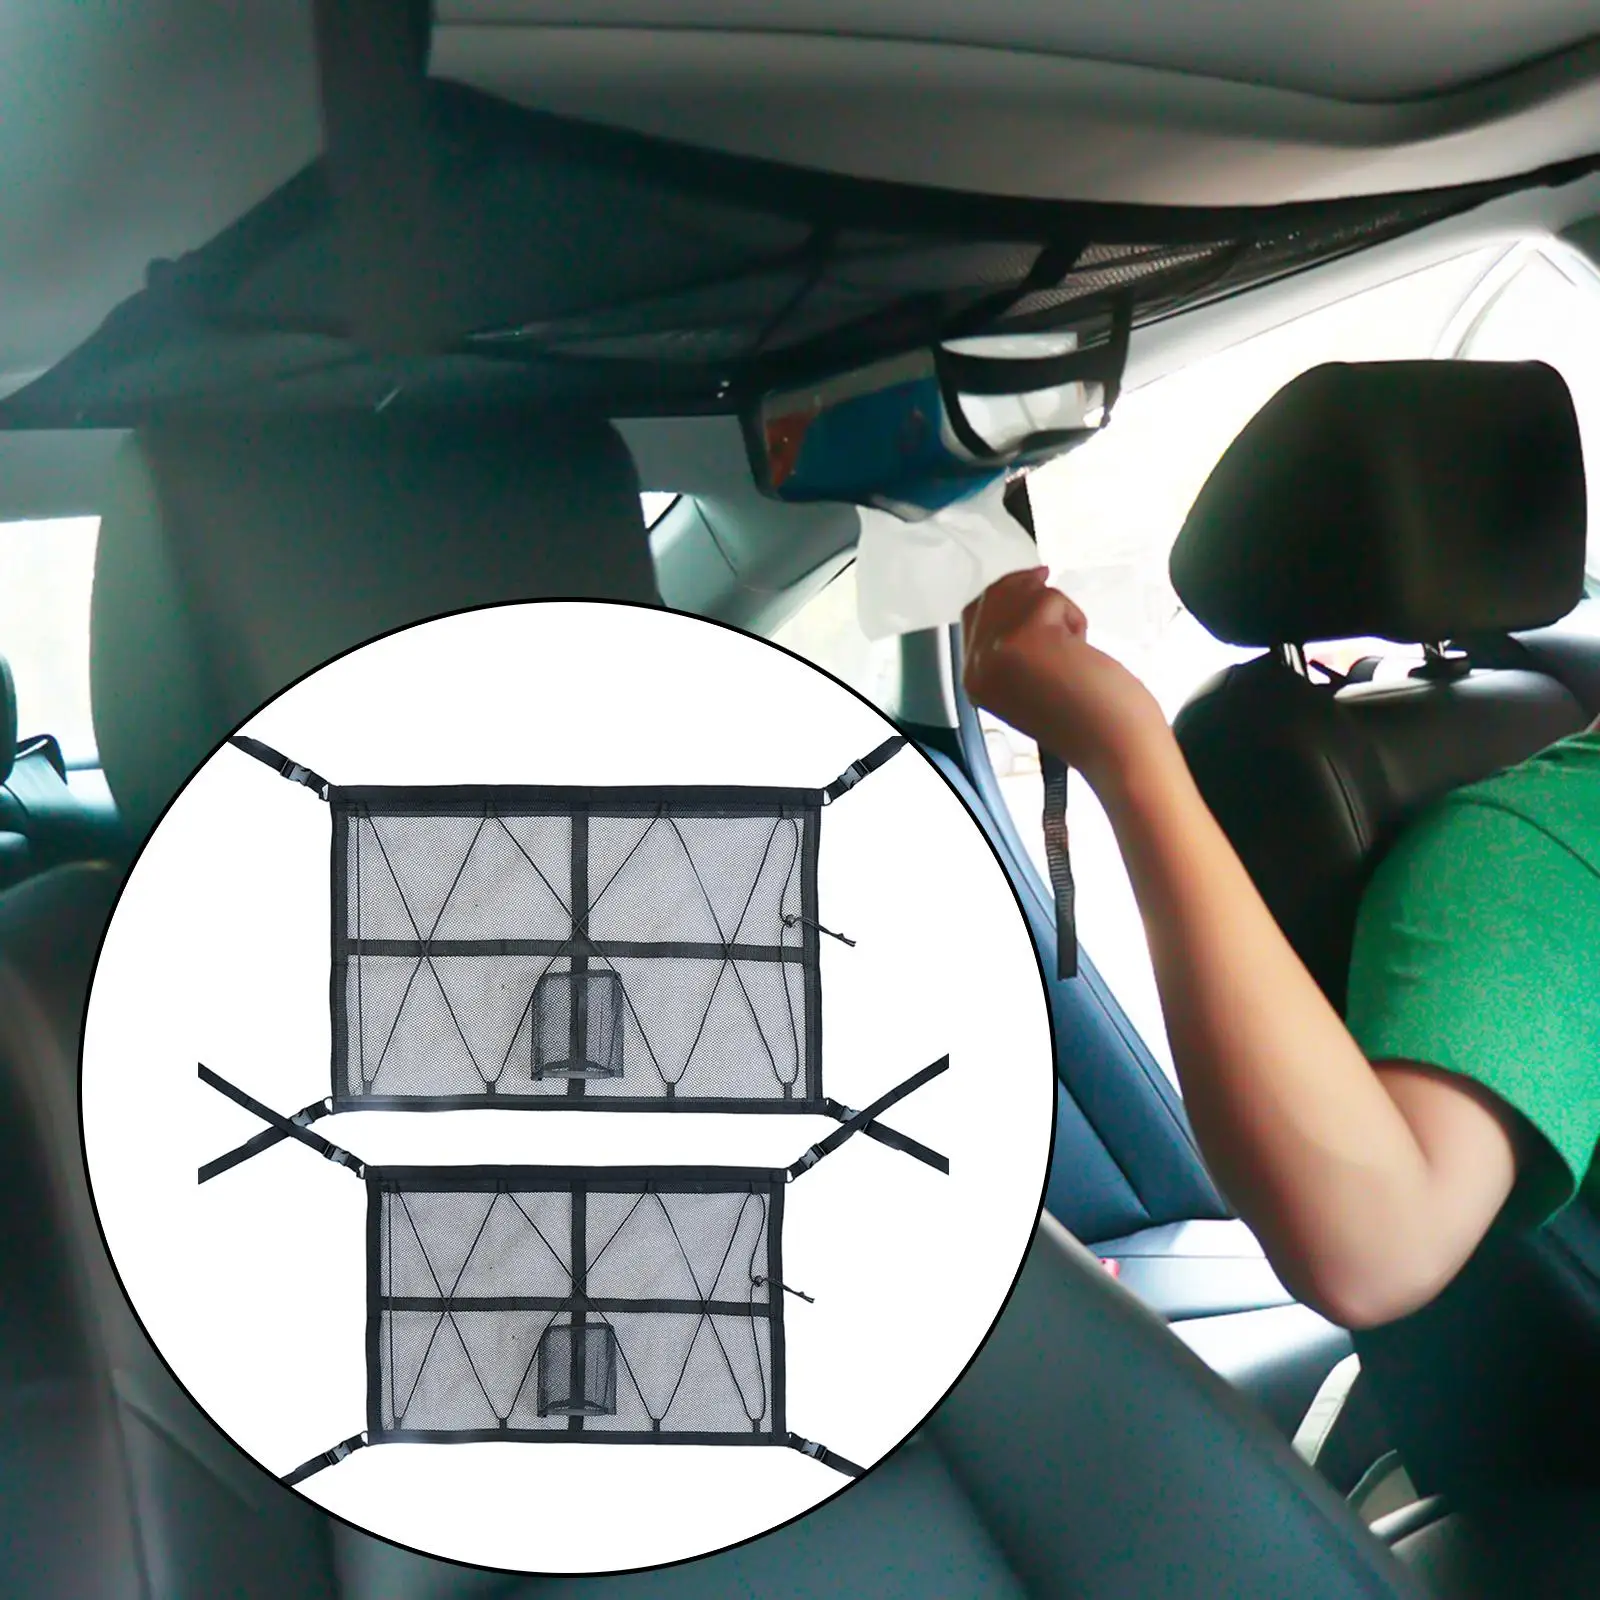 Car Trunk Organizer Interior for SUV Adjustable Net Breathable